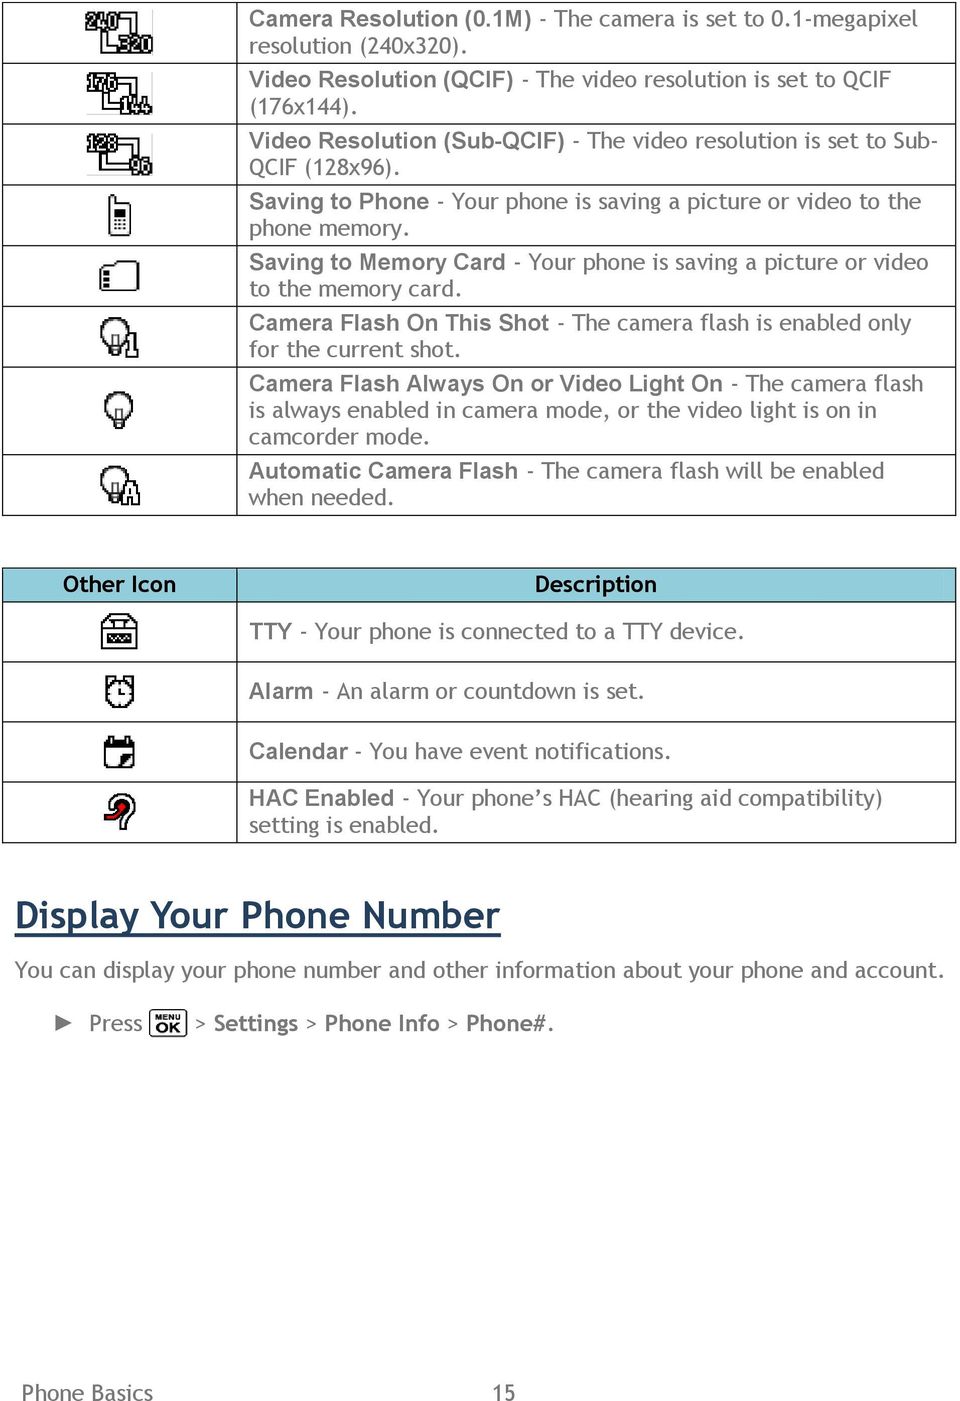 KYOCERA DuraPro. User Guide - PDF Free Download